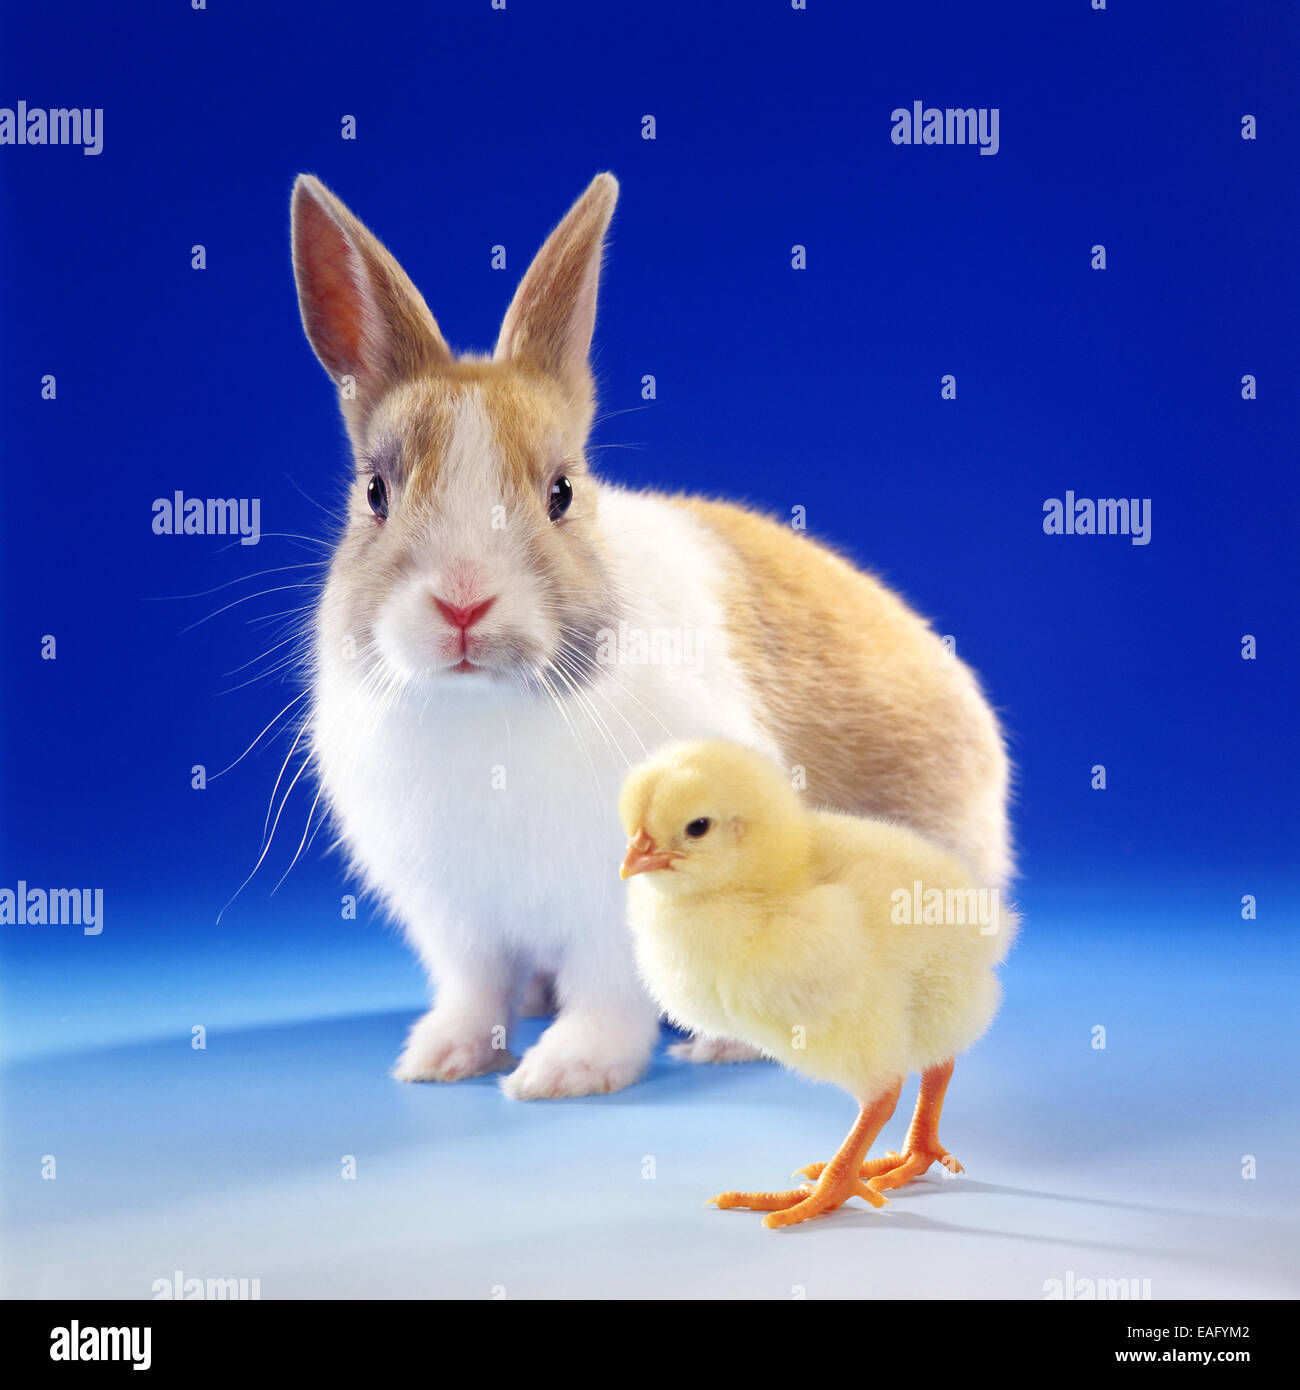 Dwarf Rabbit with chicken chick Stock Photo